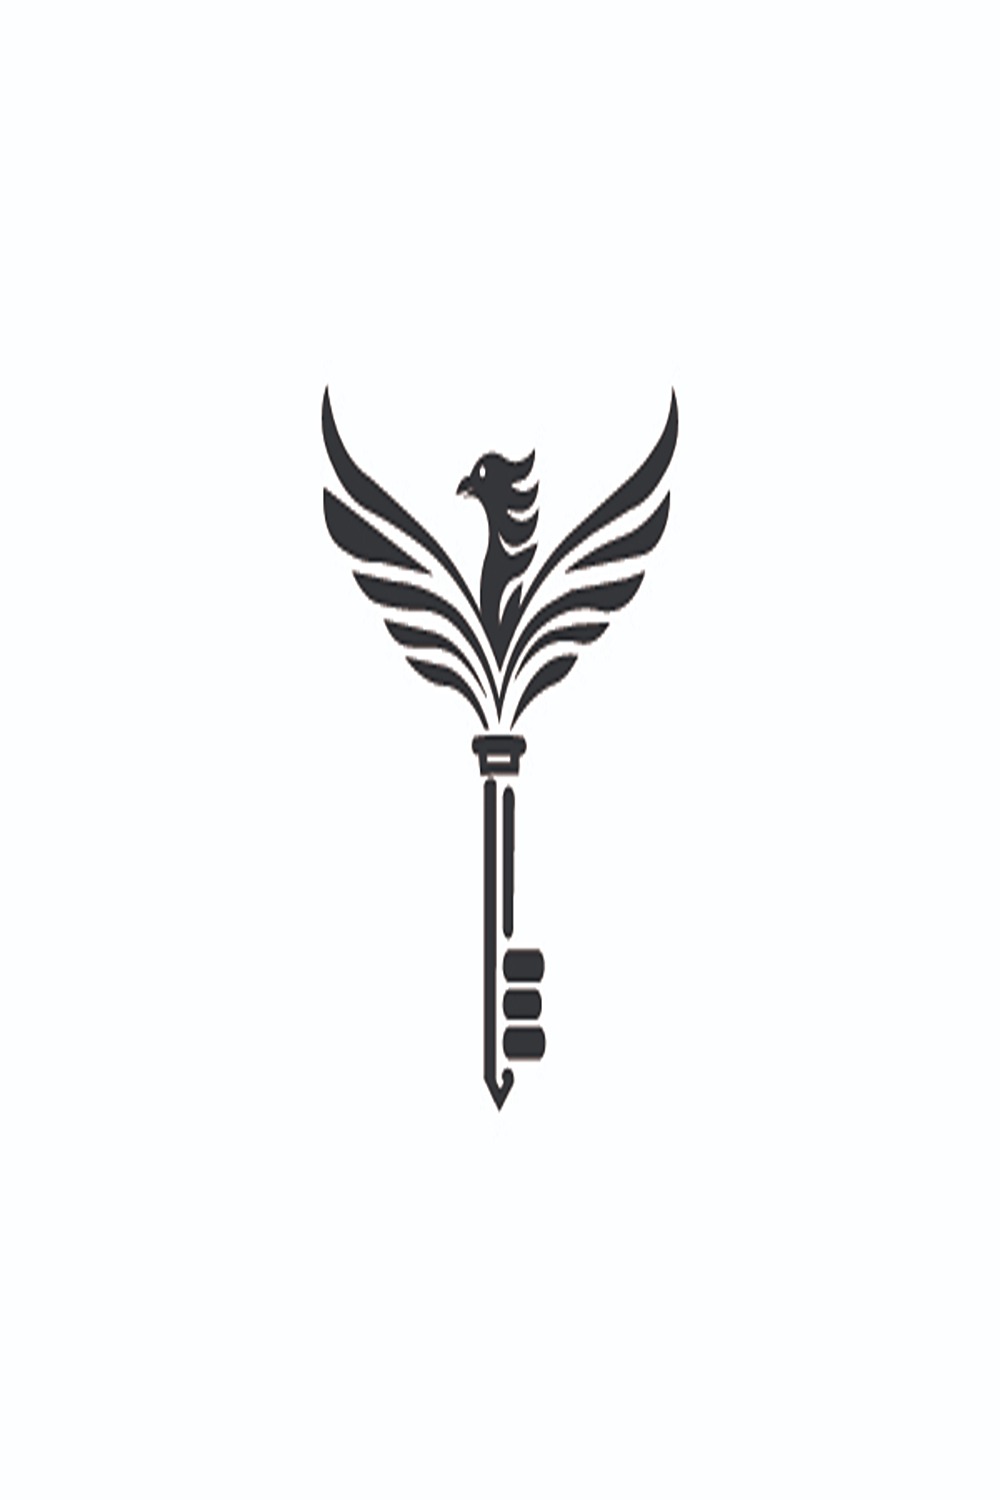 Phoenix - Key Logo Design Template pinterest preview image.